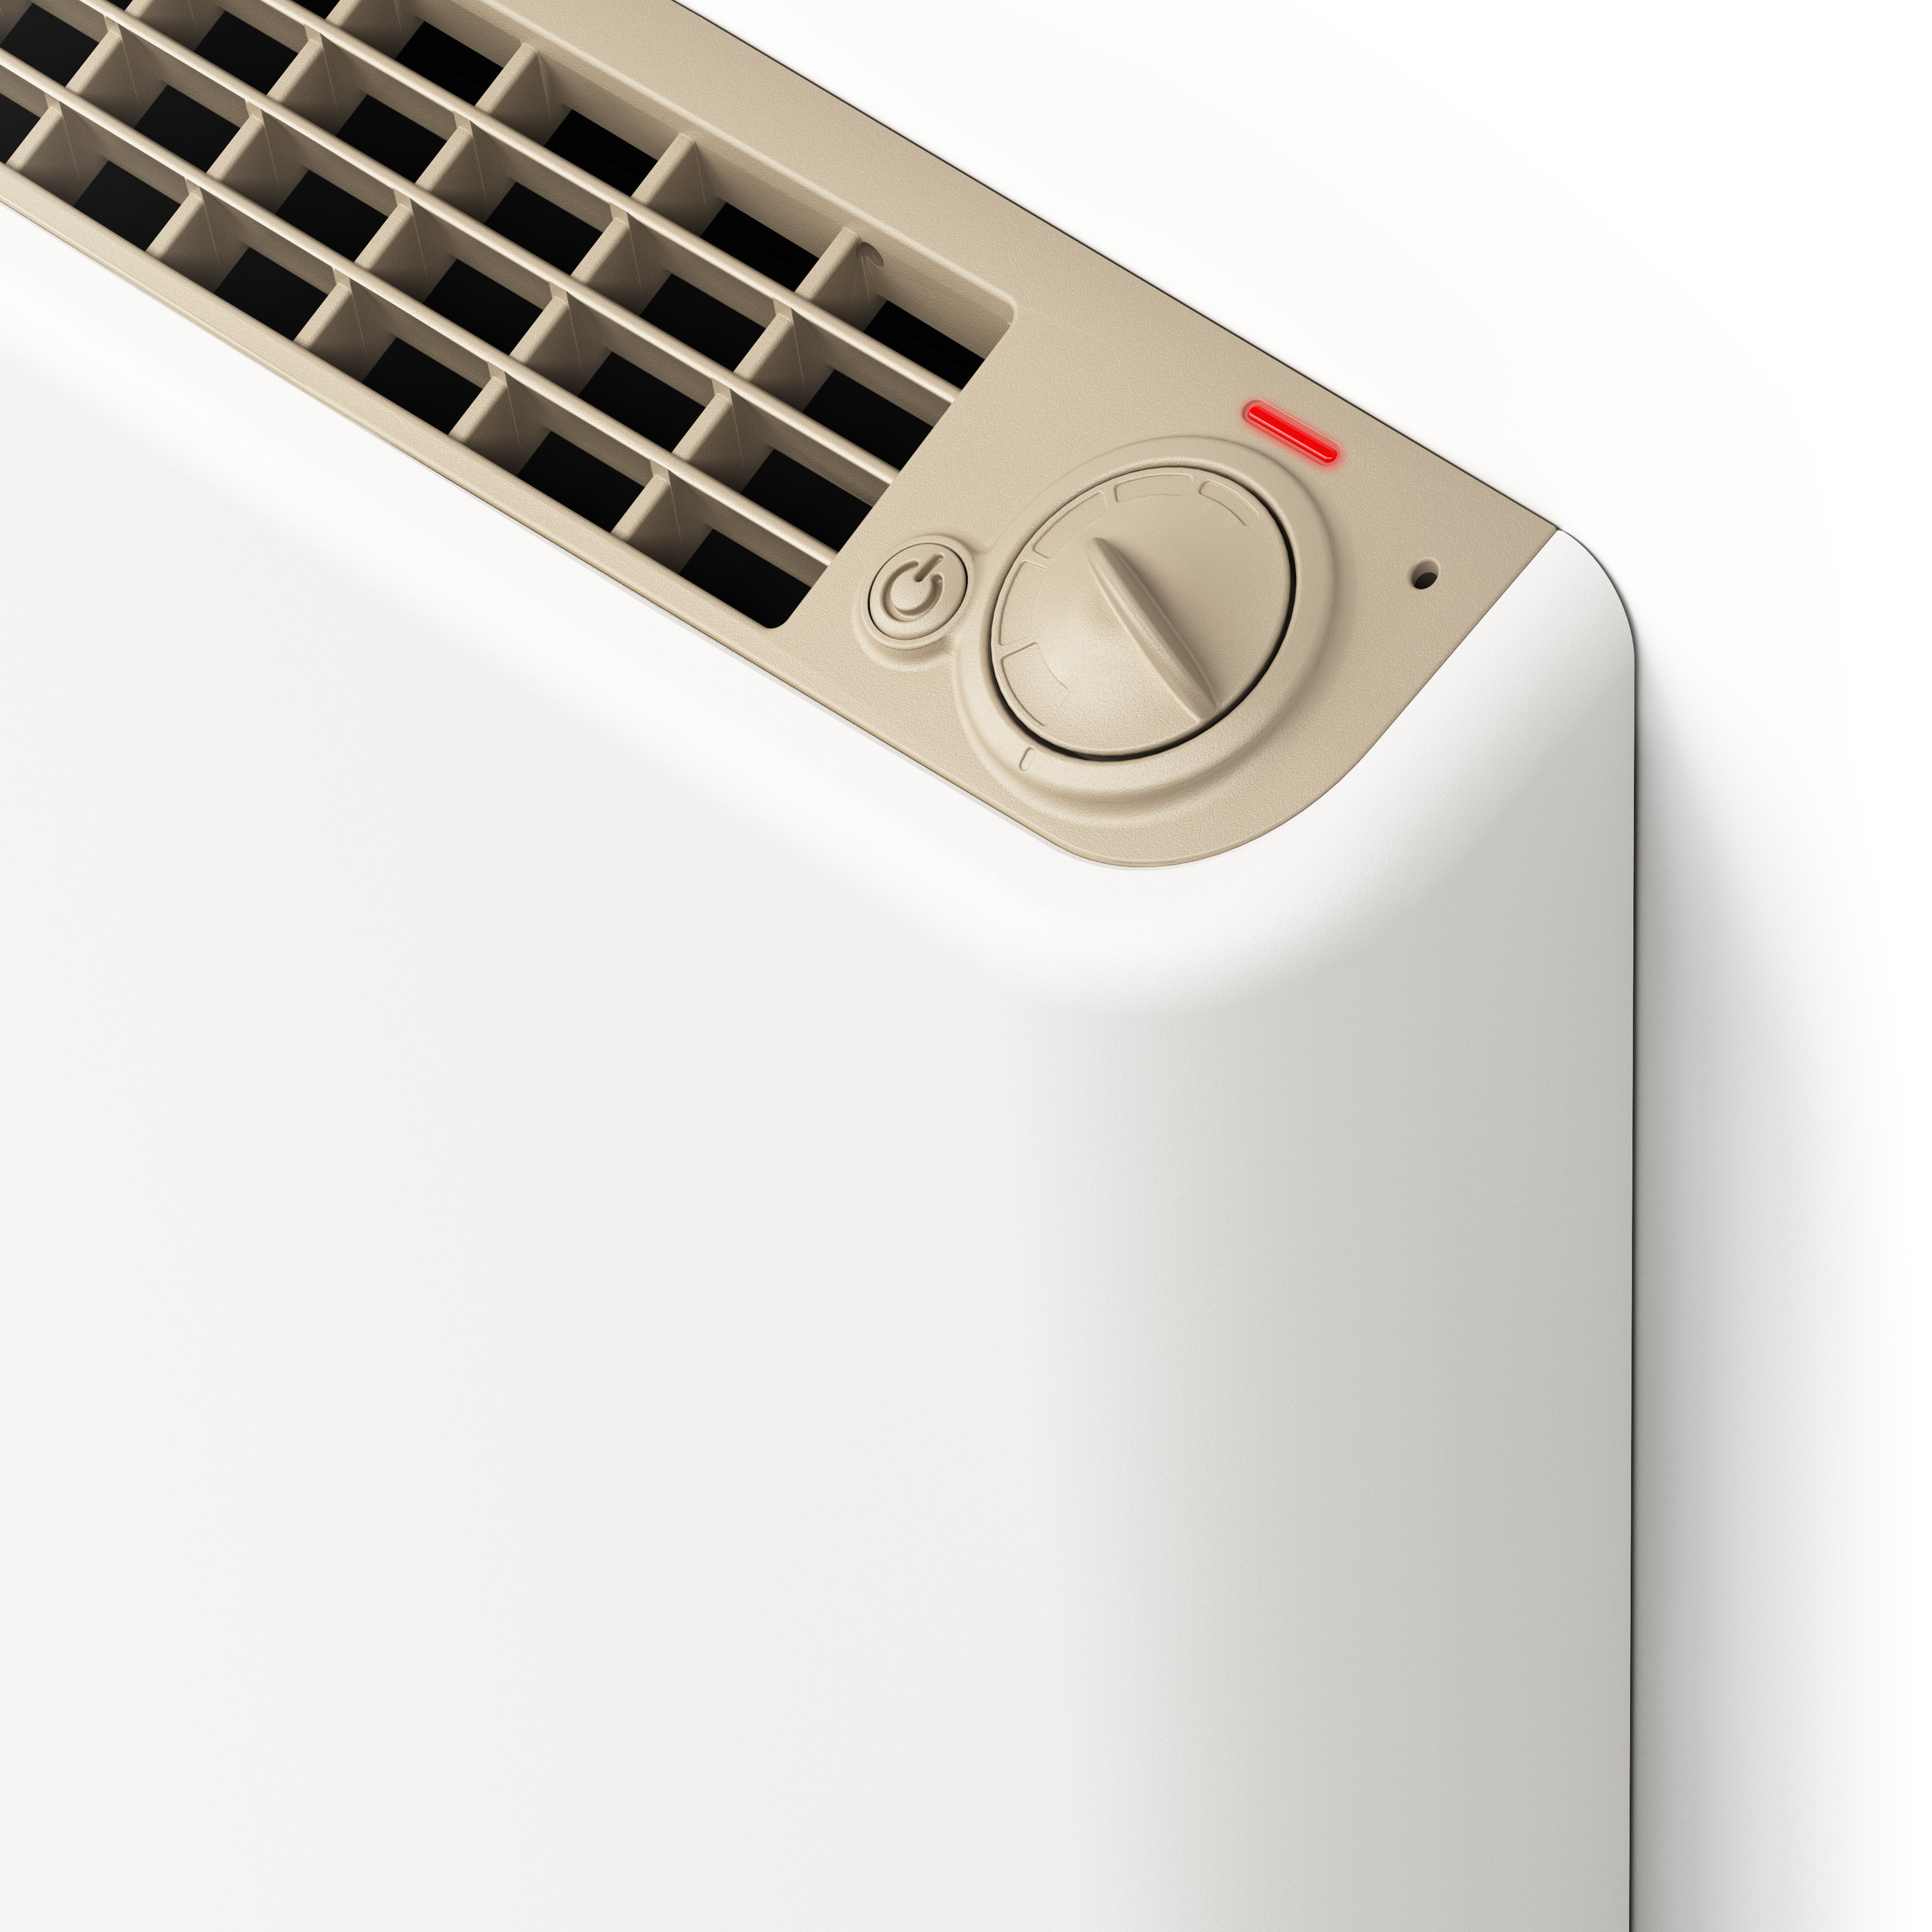 Heater envi hardwired heaters